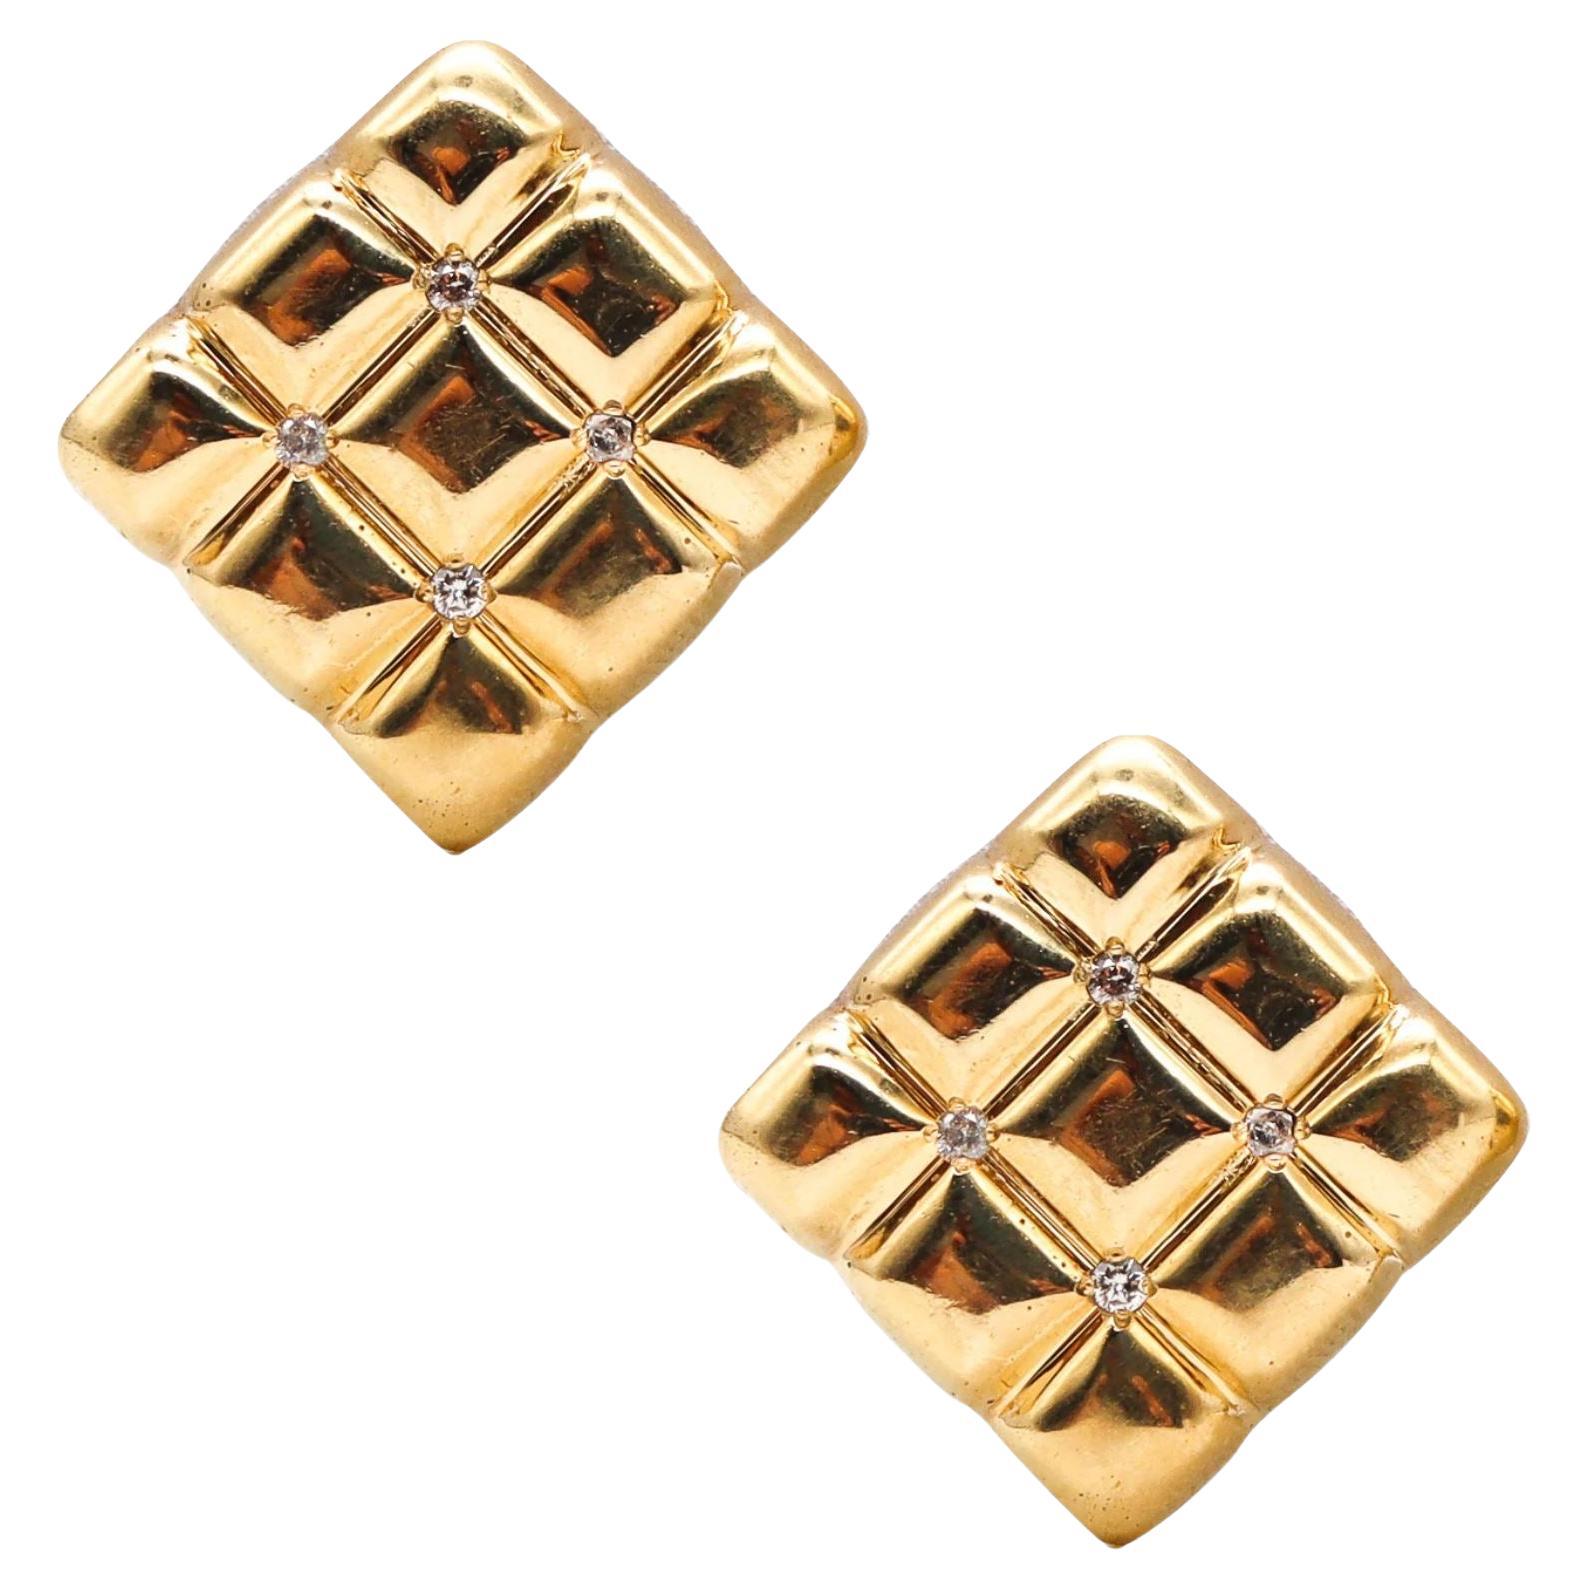 modernist chic & sleek now trending Vintage 70s Costume Jewelry Salmon Pink and Gold Enamel Geometric Earrings